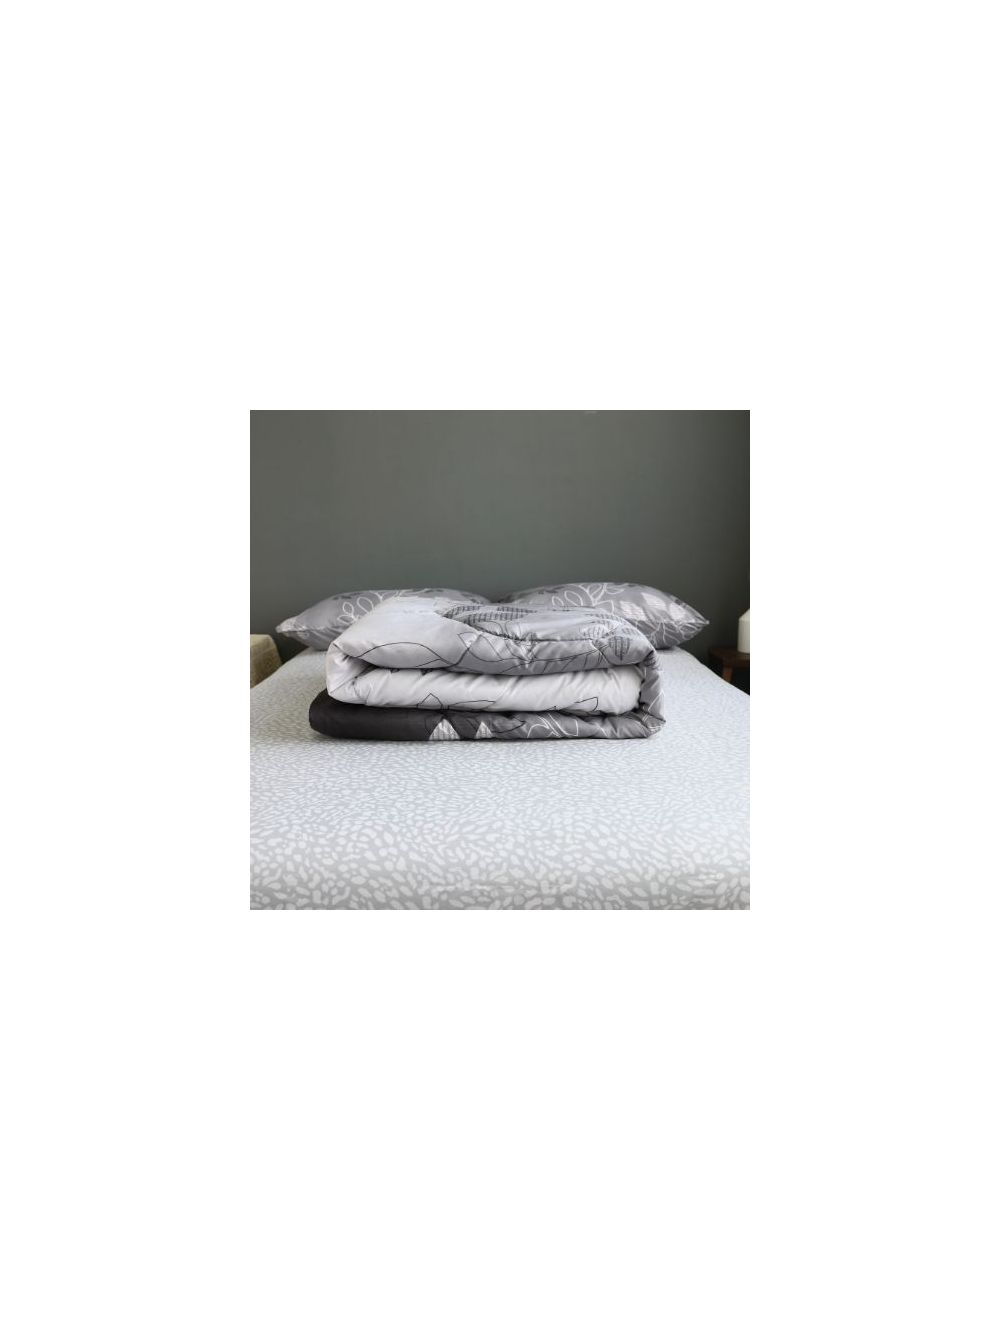 DEALS FOR LESS - Comforter Set Of 4 Pieces , Leaves Design Coal Grey Color-CFT41-07